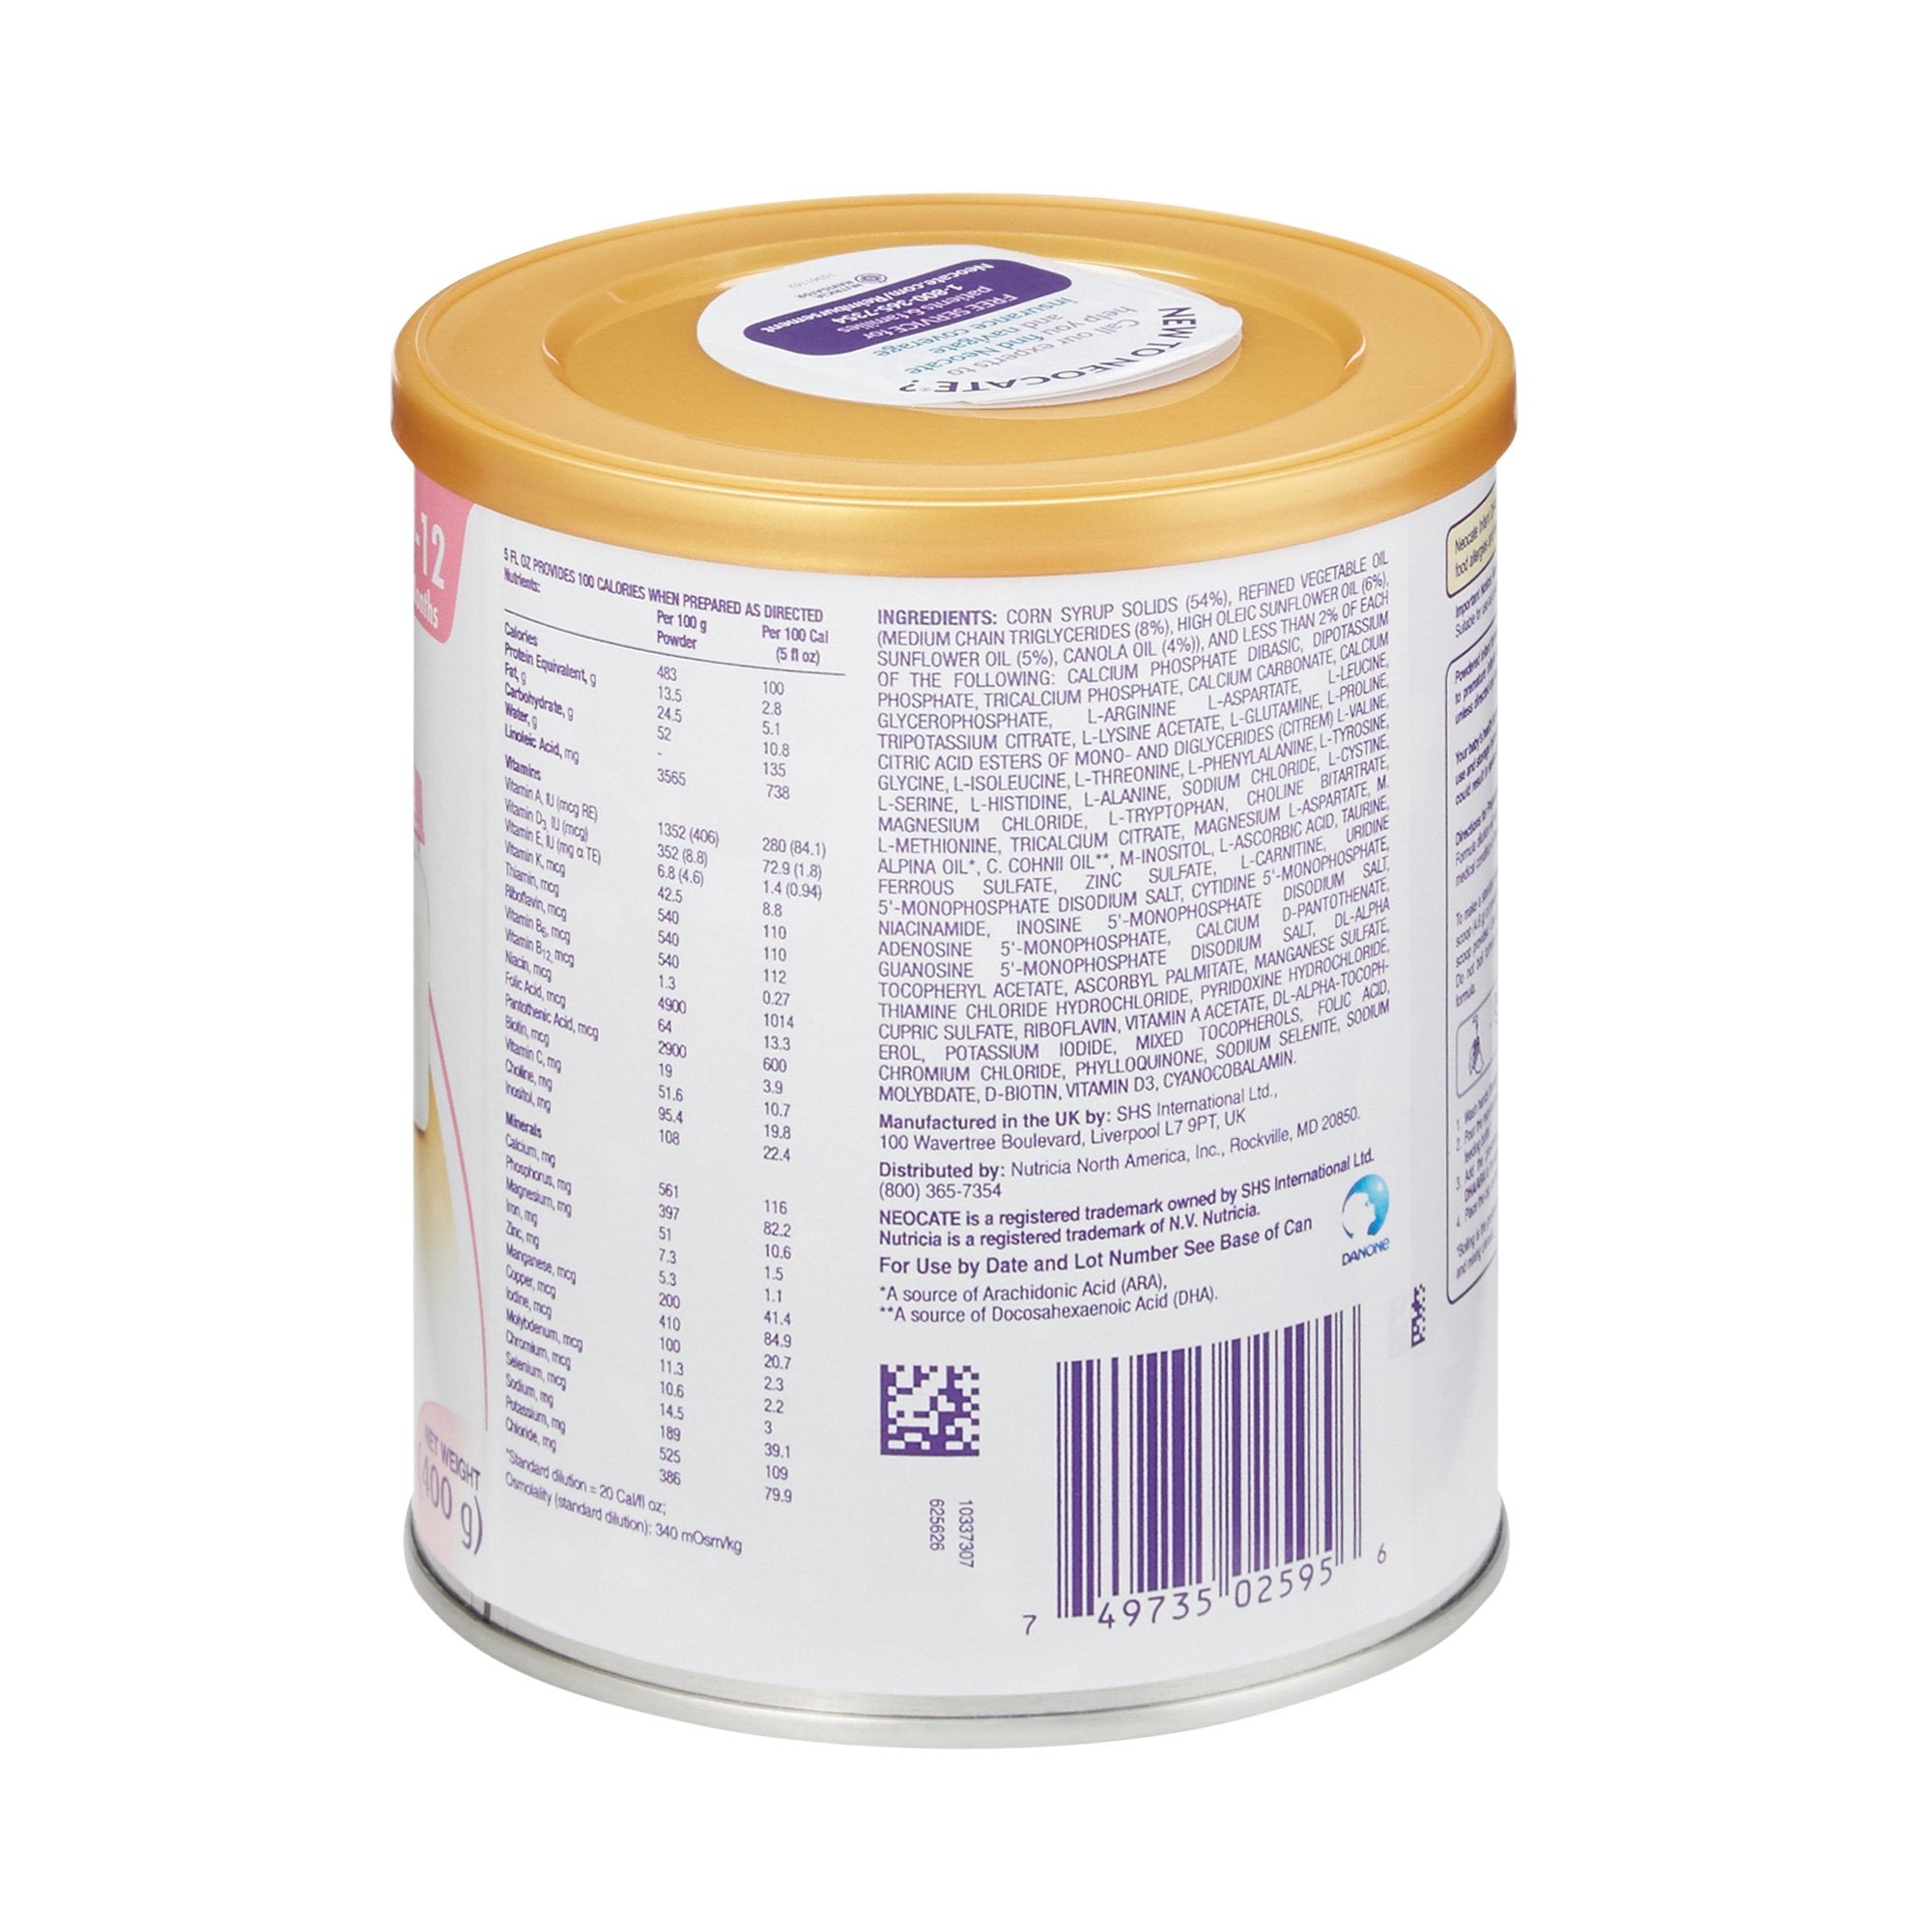 Infant Formula Neocate DHA & ARA 14.1 oz. Can Powder Food Allergies